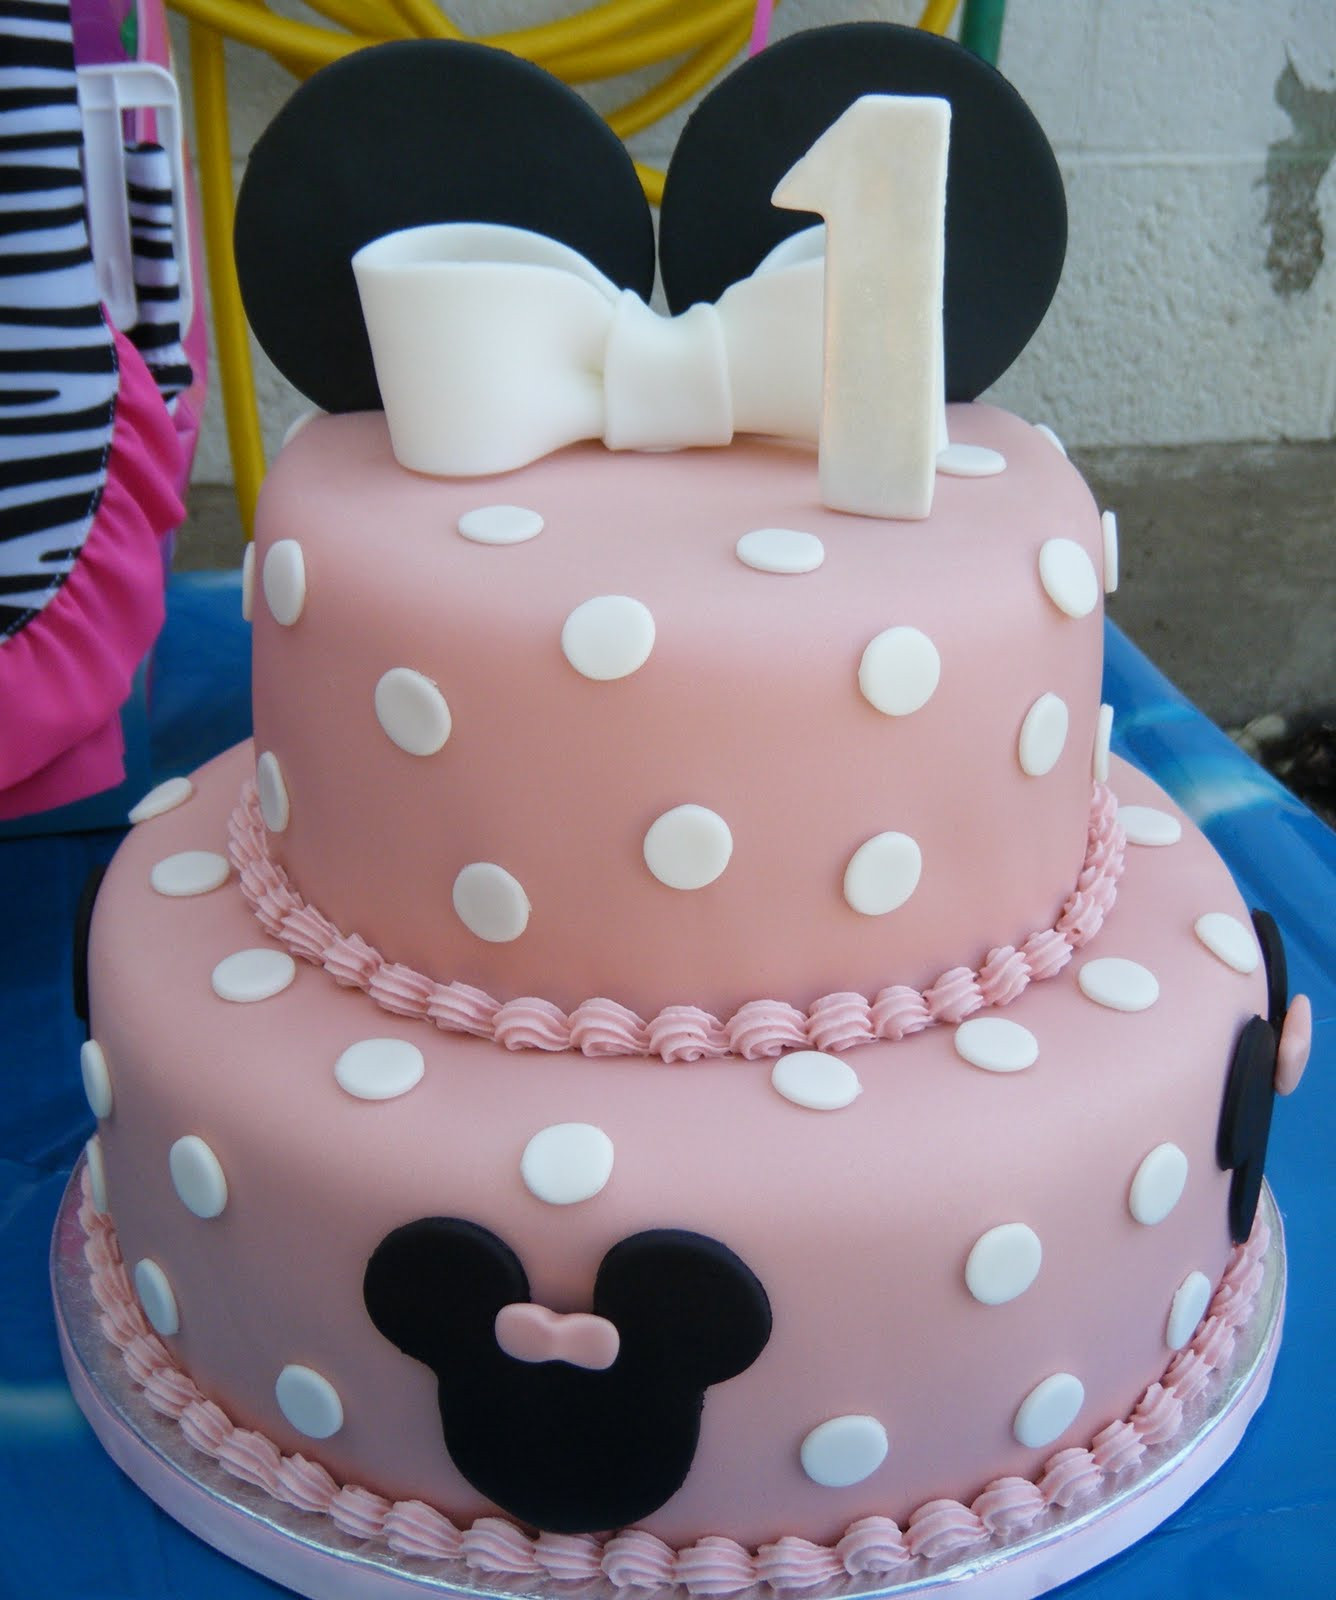 Happy Birthday Jessica Cake
 Cakessica Mini Mouse Birthday Cake